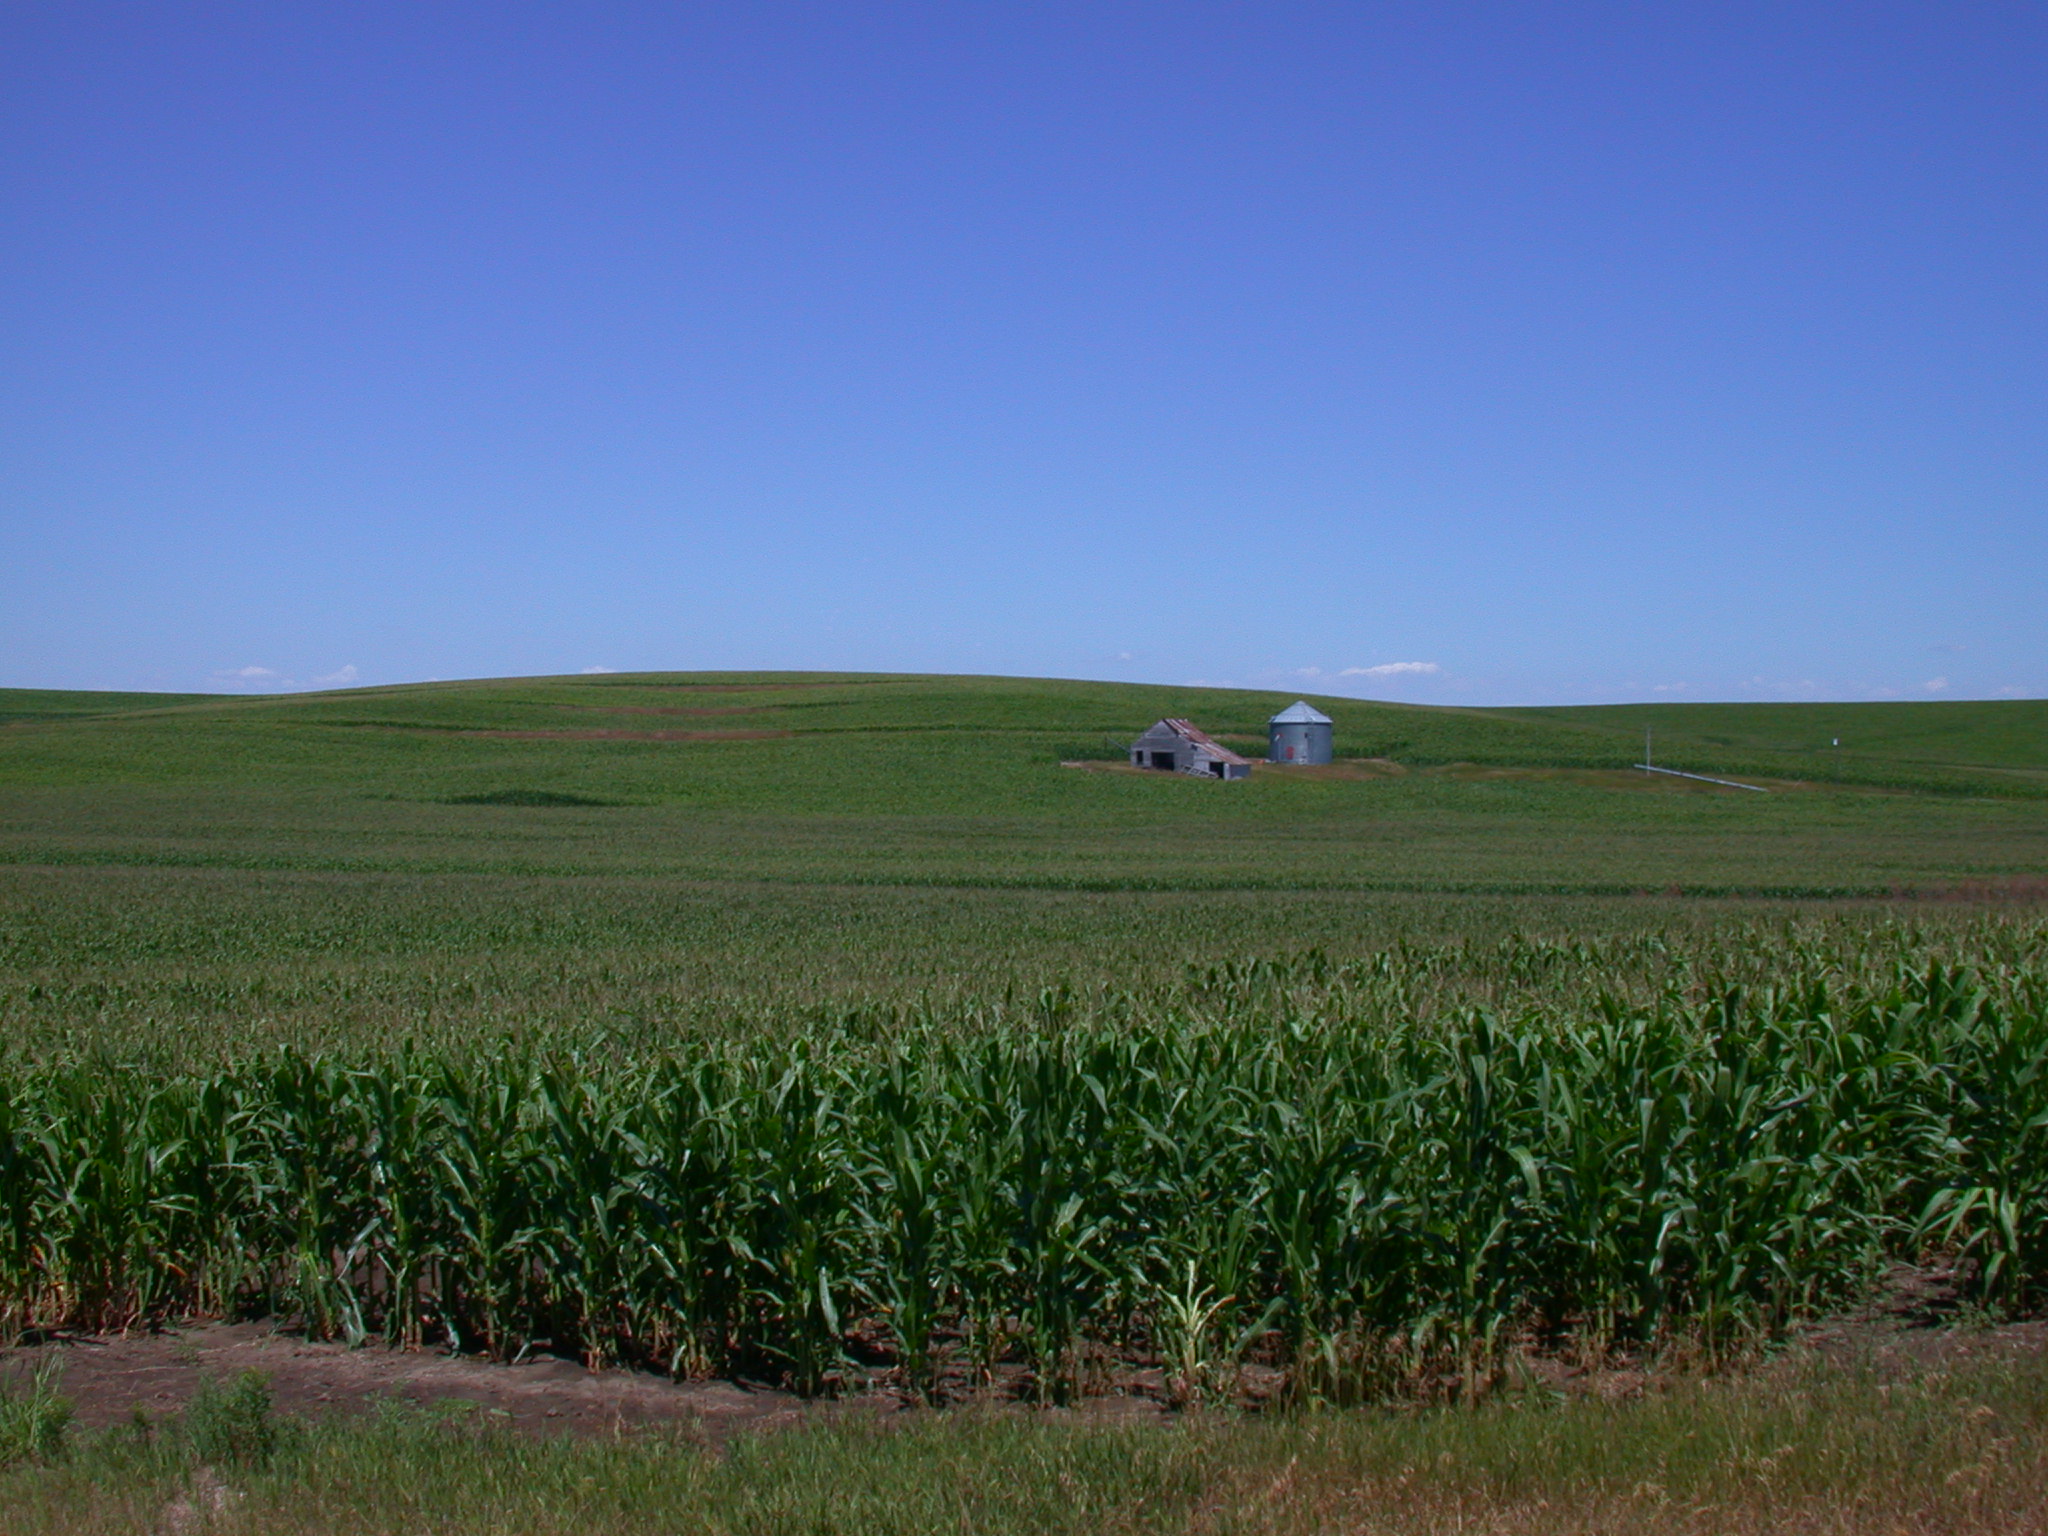 Nebraska corn field (Click image to download hi-res version)